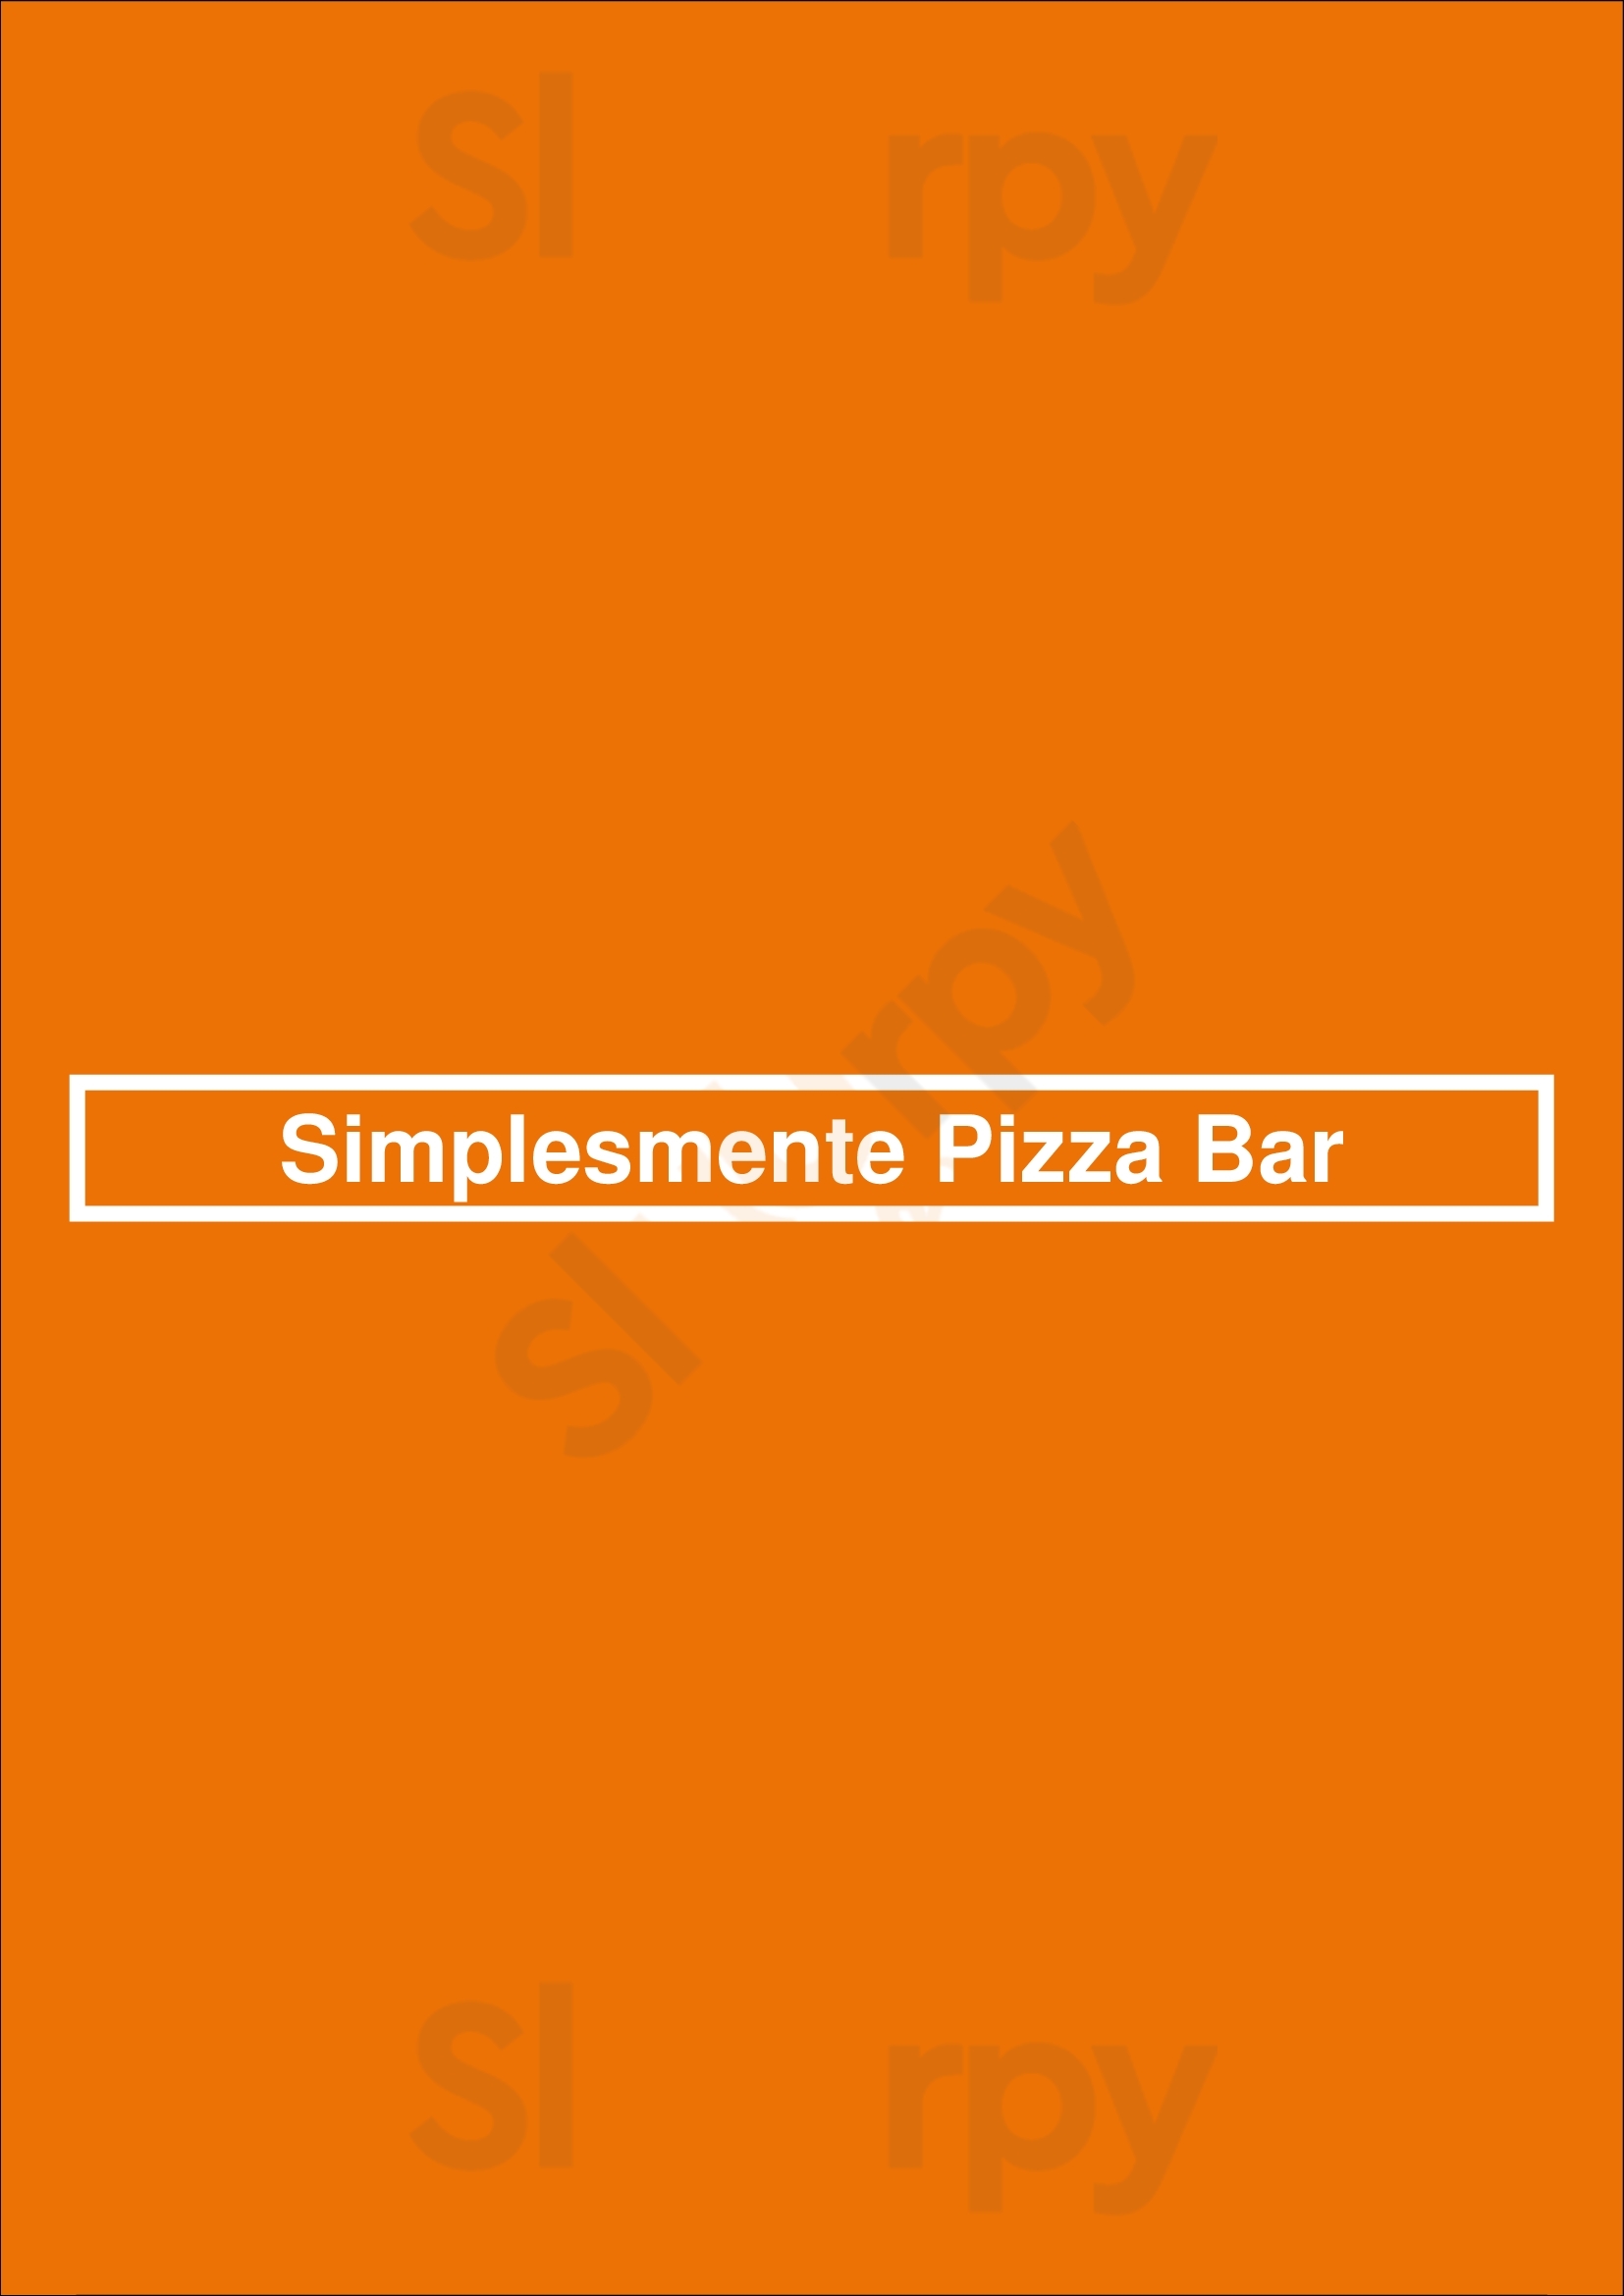 Simplesmente Pizza Bar Lisboa Menu - 1